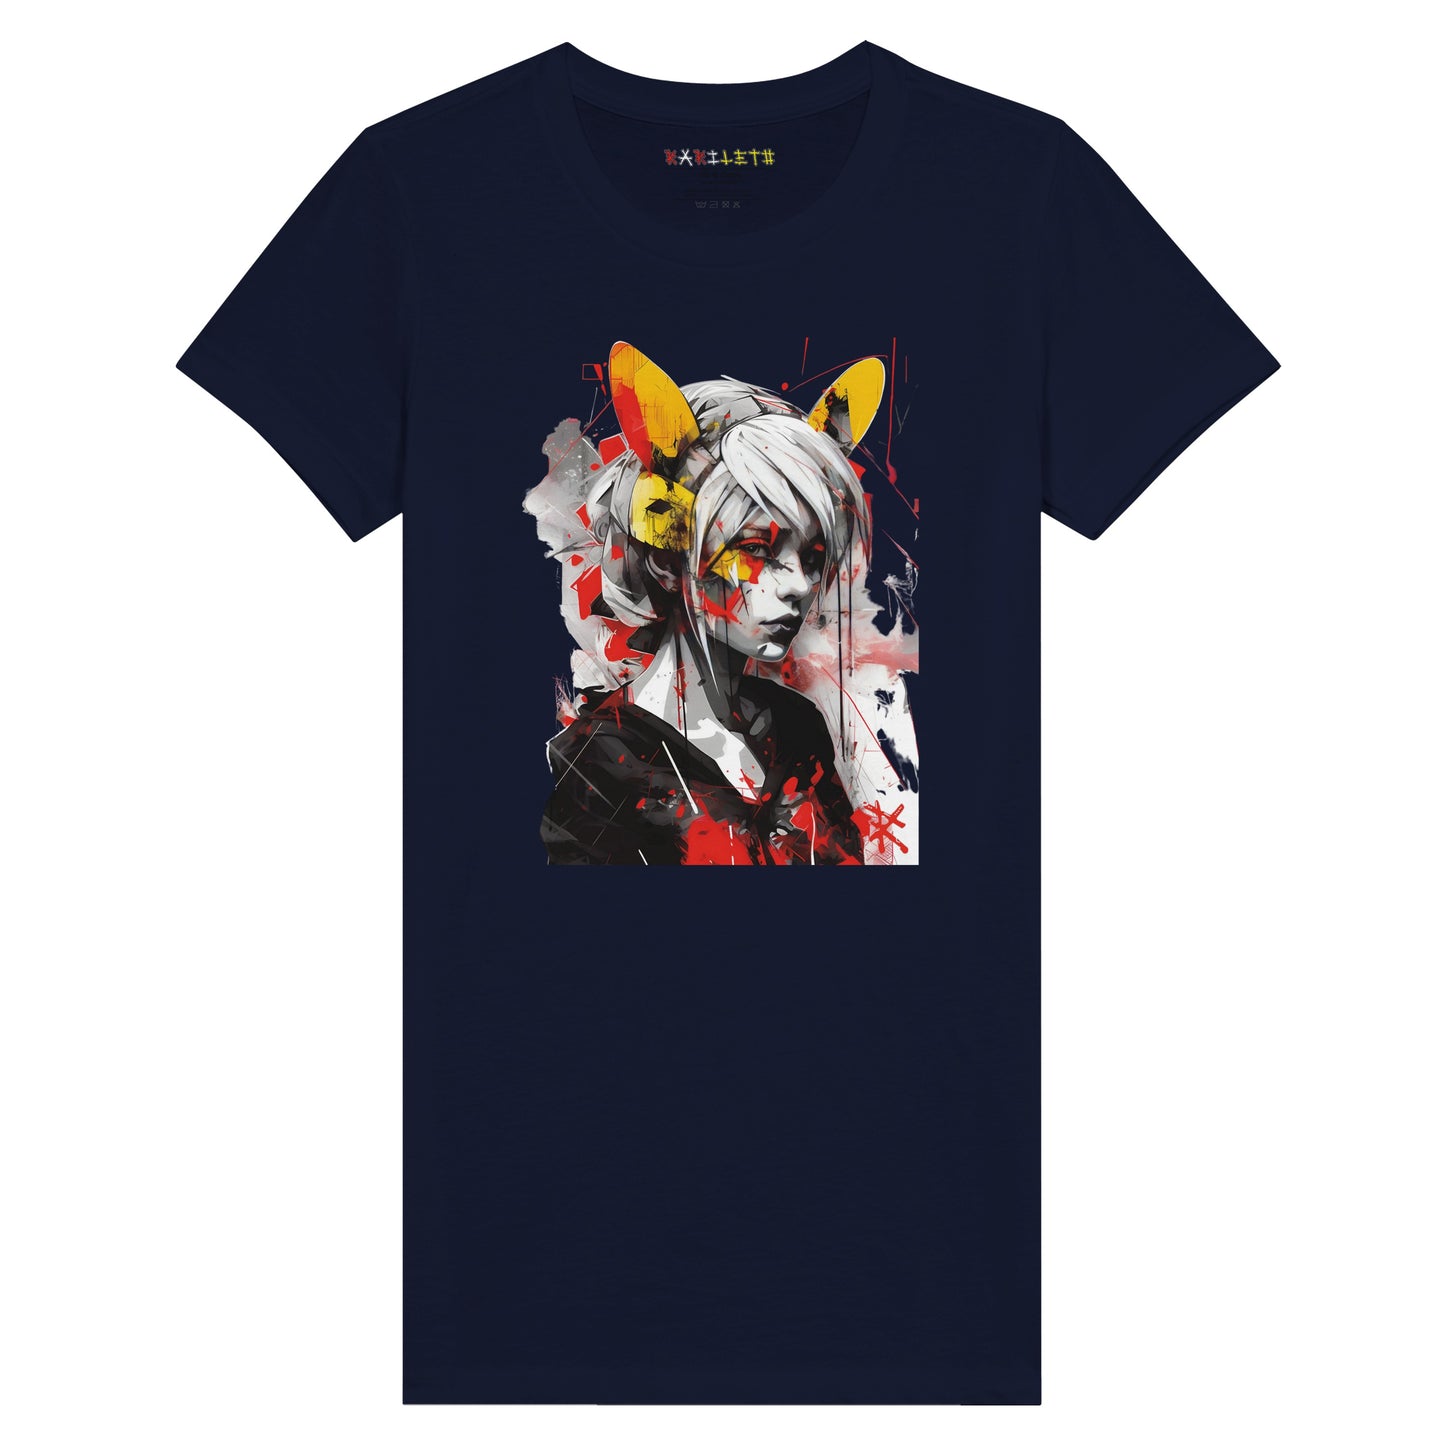 GIRL WITH CAT EARS Premium Tee - Rarileto t shirts - Navy - S